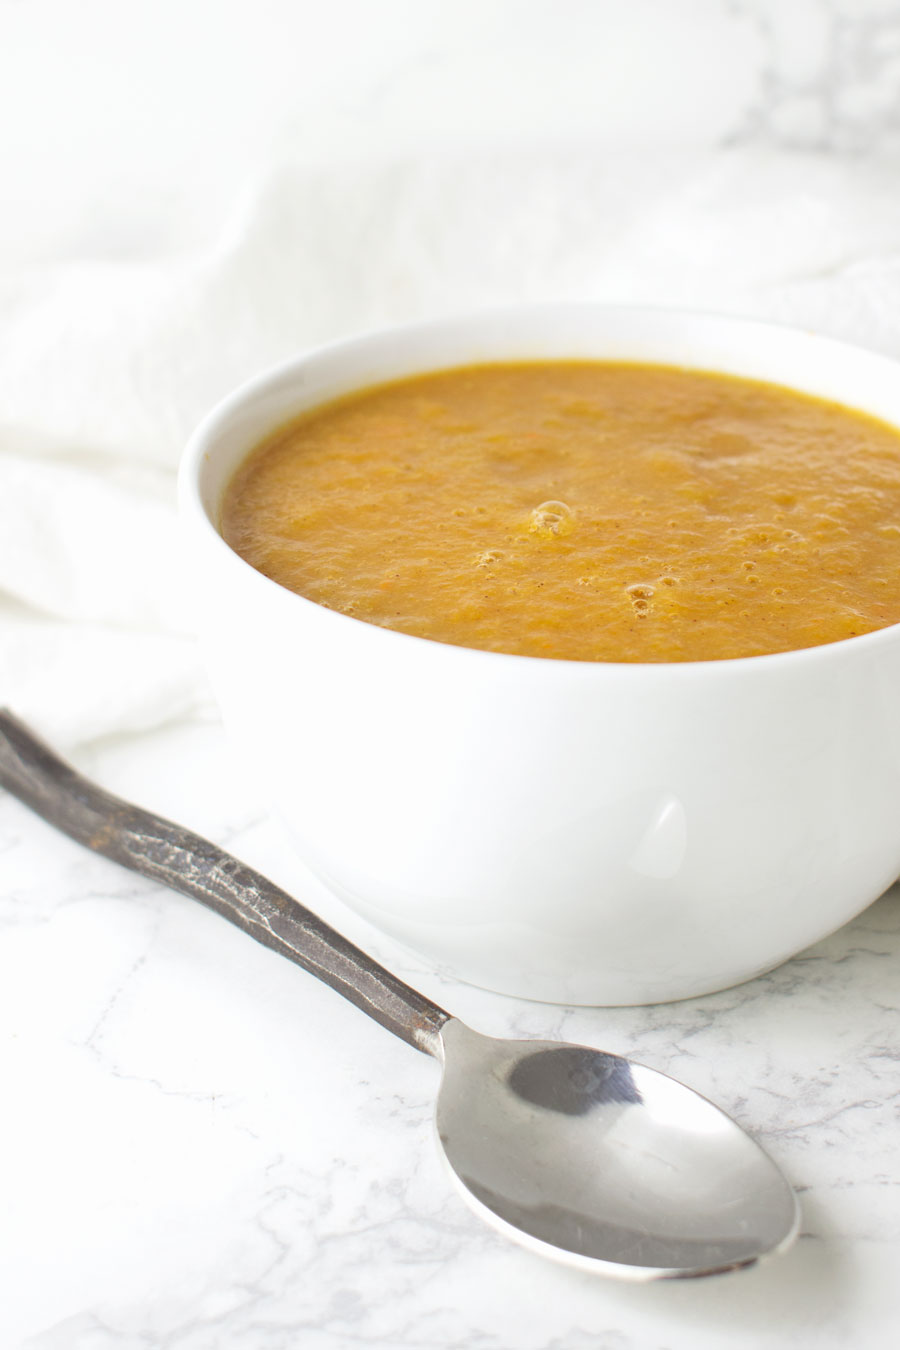 Cinnamon Pumpkin Soup recipe from acleanplate.com #paleo #aip #glutenfree